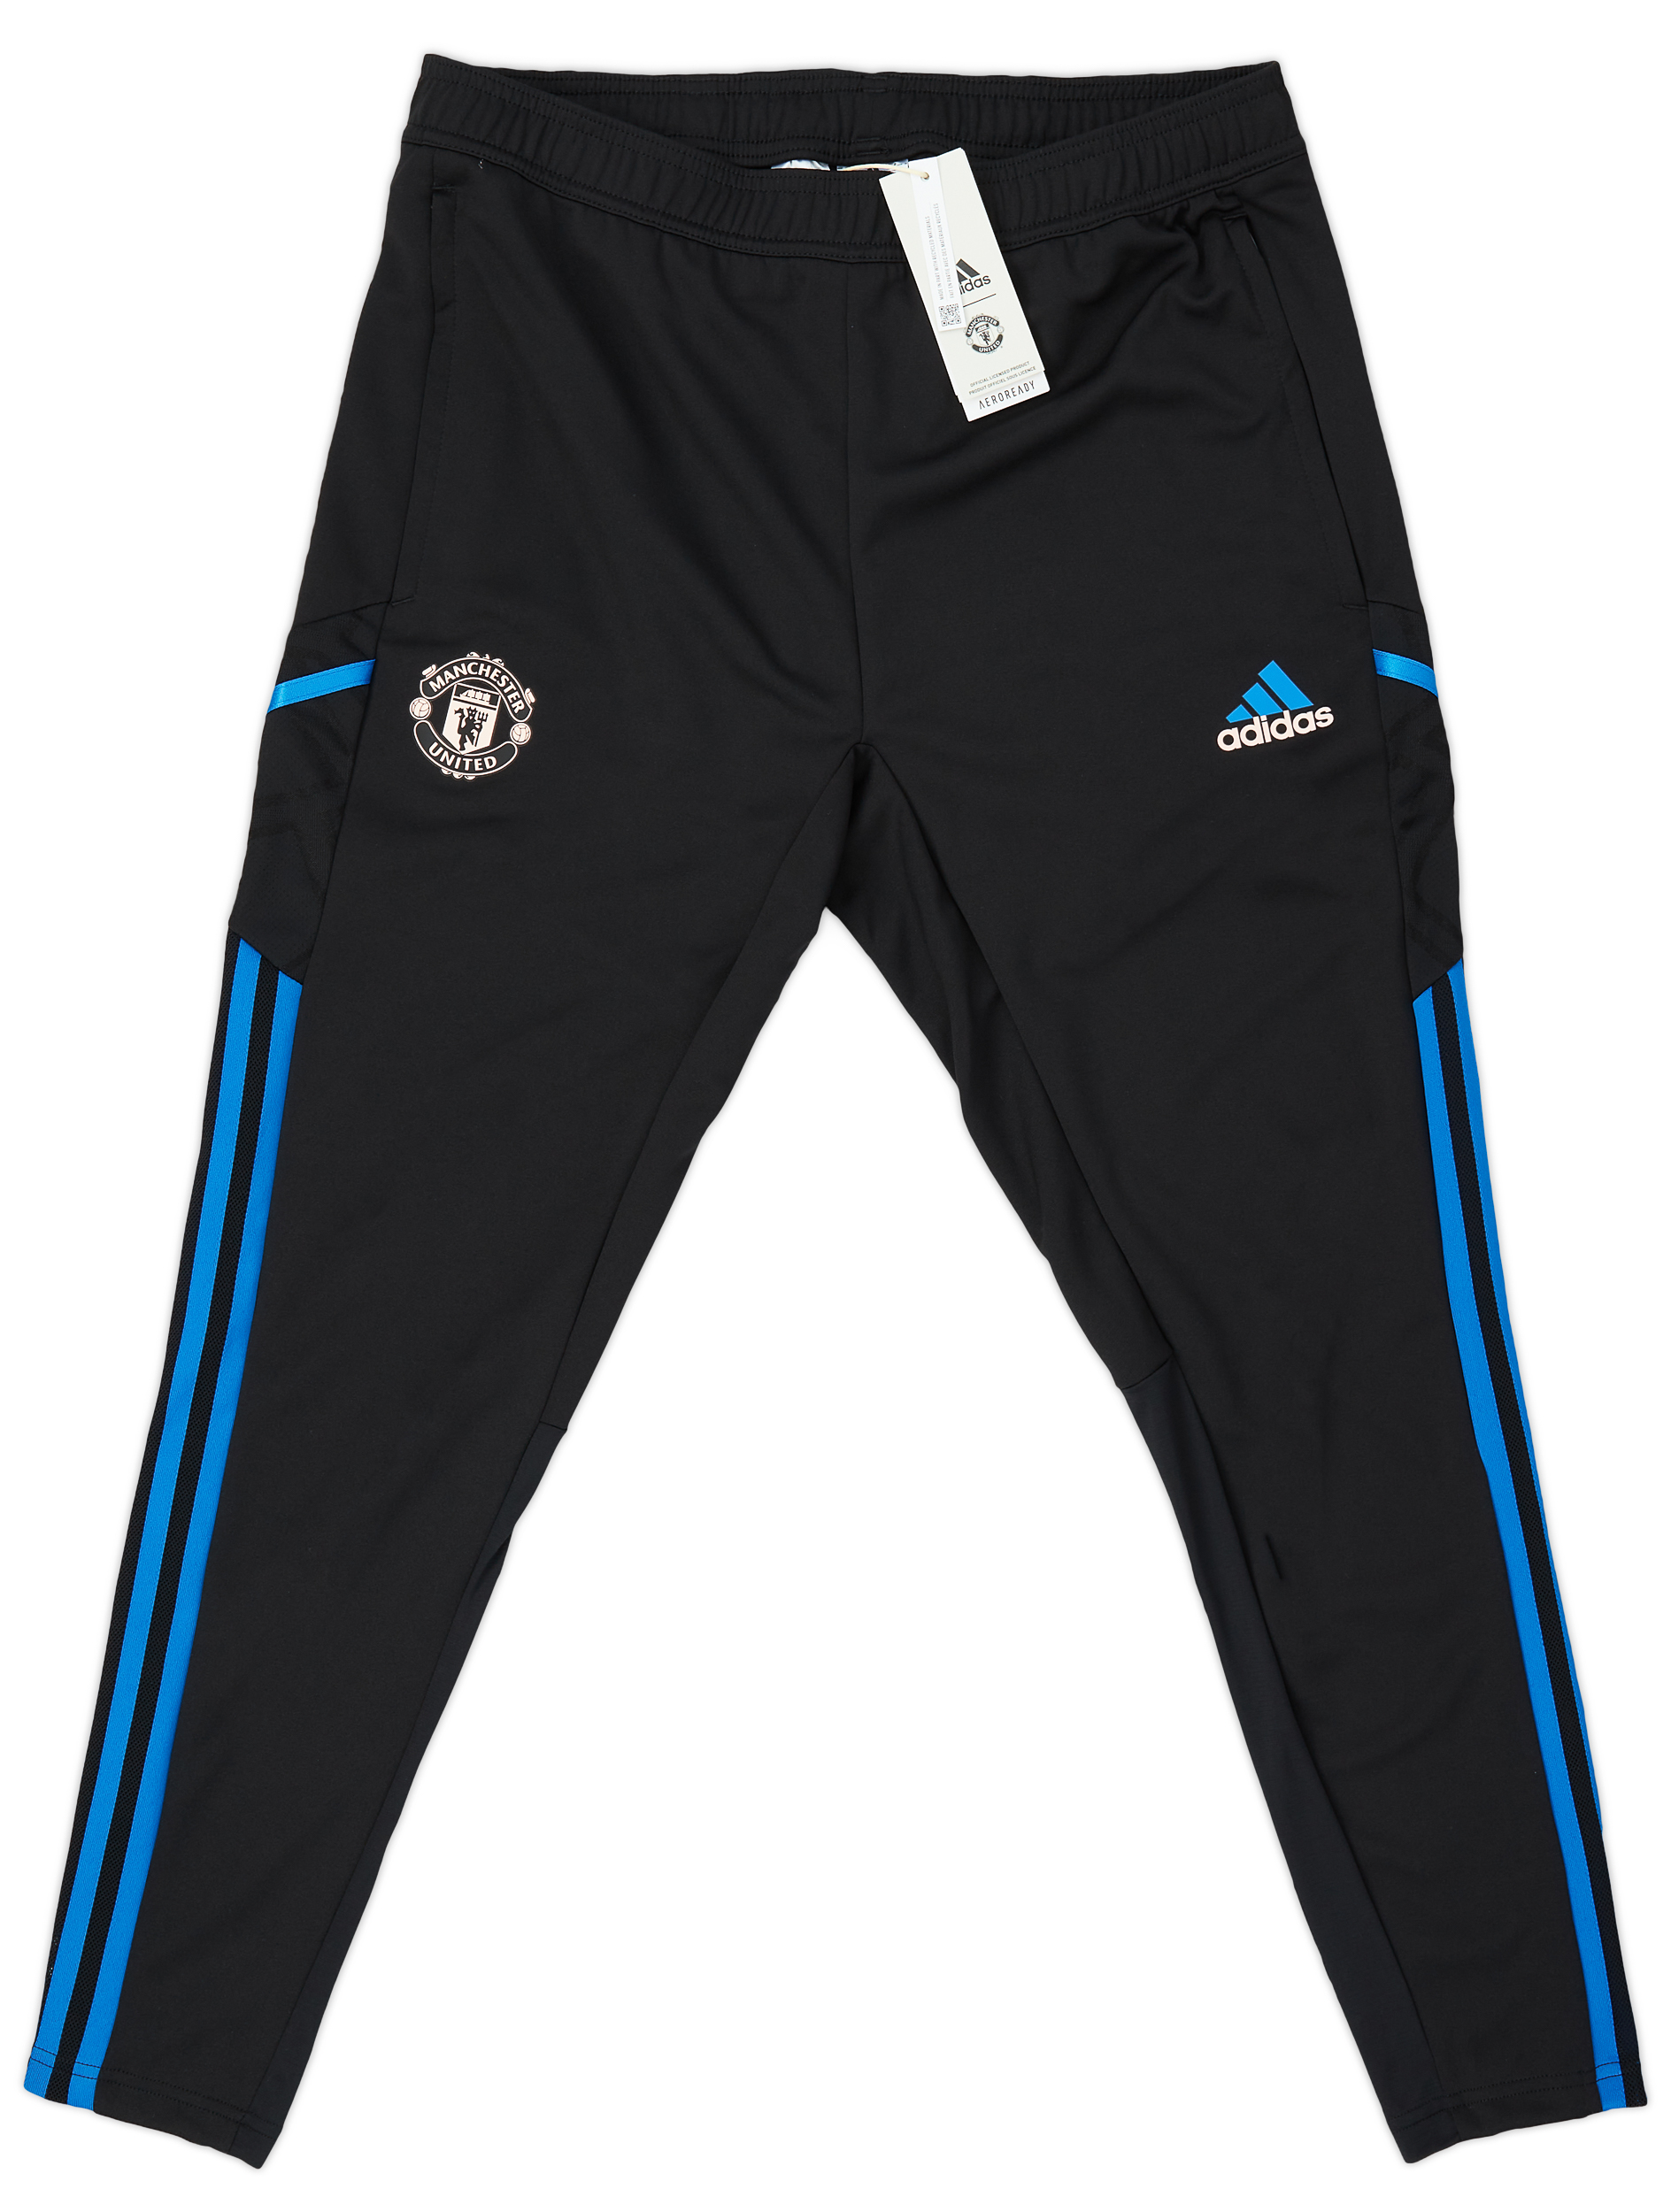 2022-23 Manchester United adidas Training Pants/Bottoms